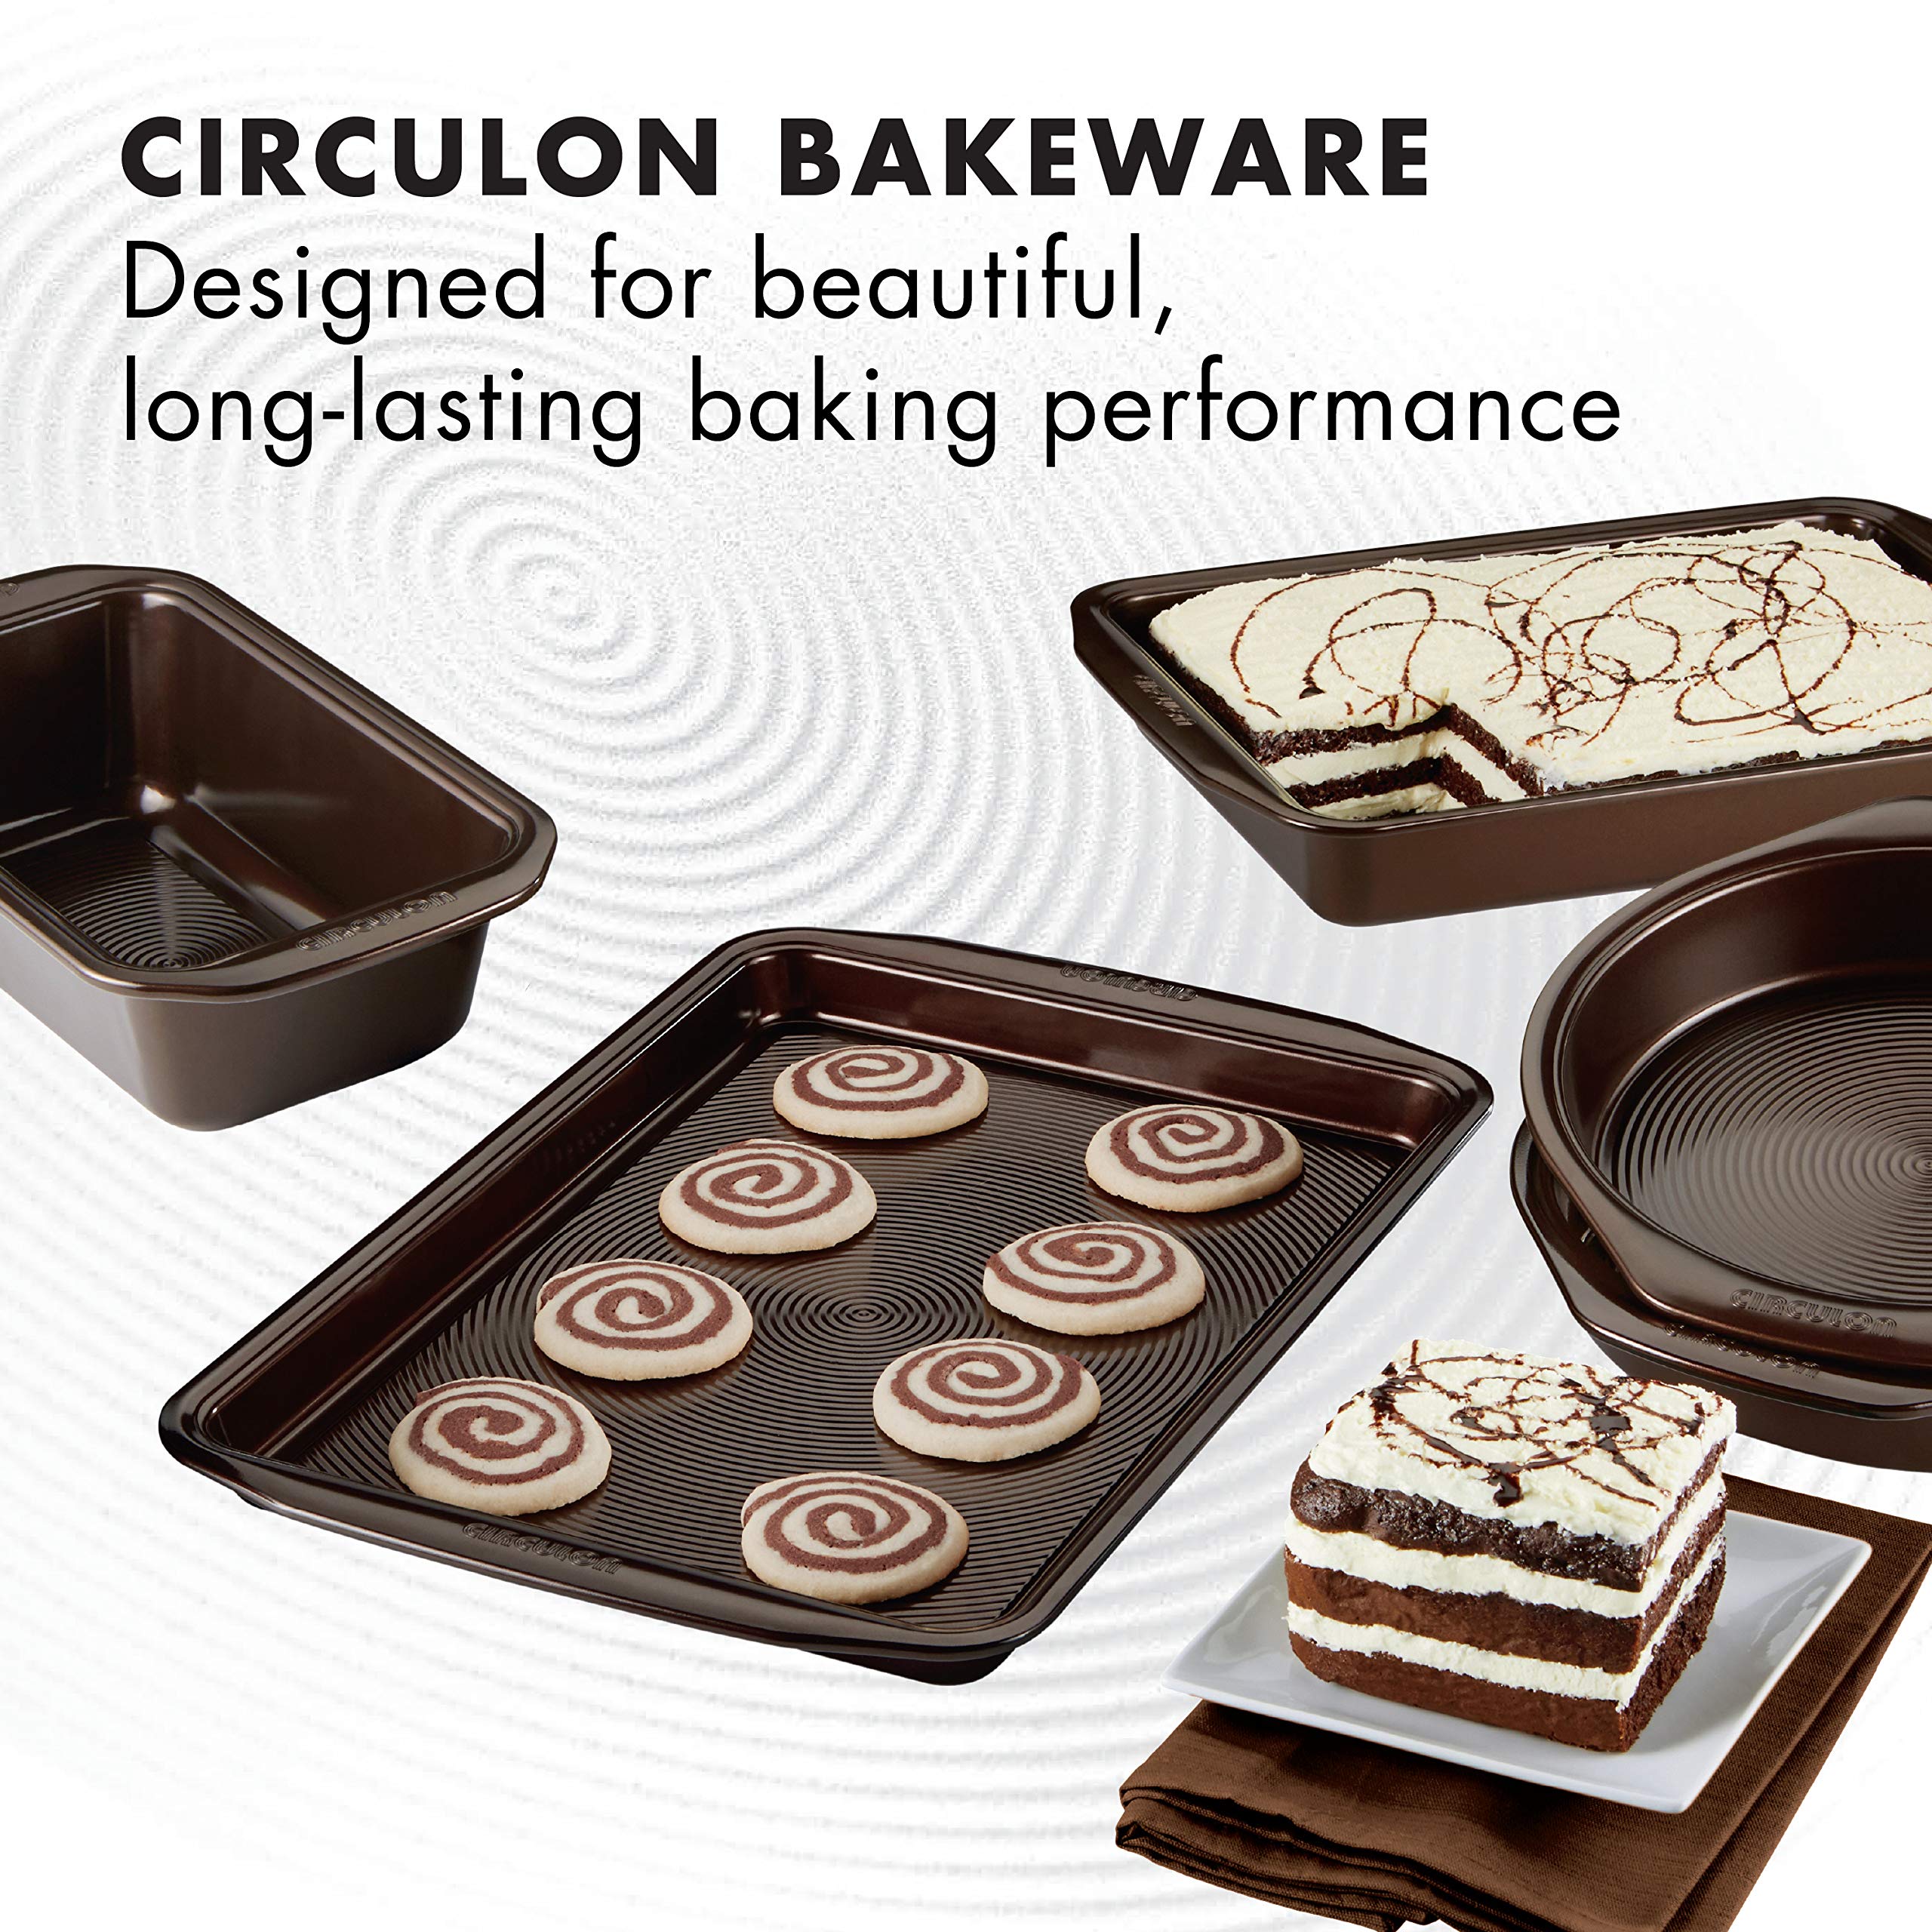 Circulon Nonstick Bakeware Set with Nonstick Cookie Sheet, Bread Pan, Bakings Pan and Cake Pans - 5 Piece, Chocolate Brown